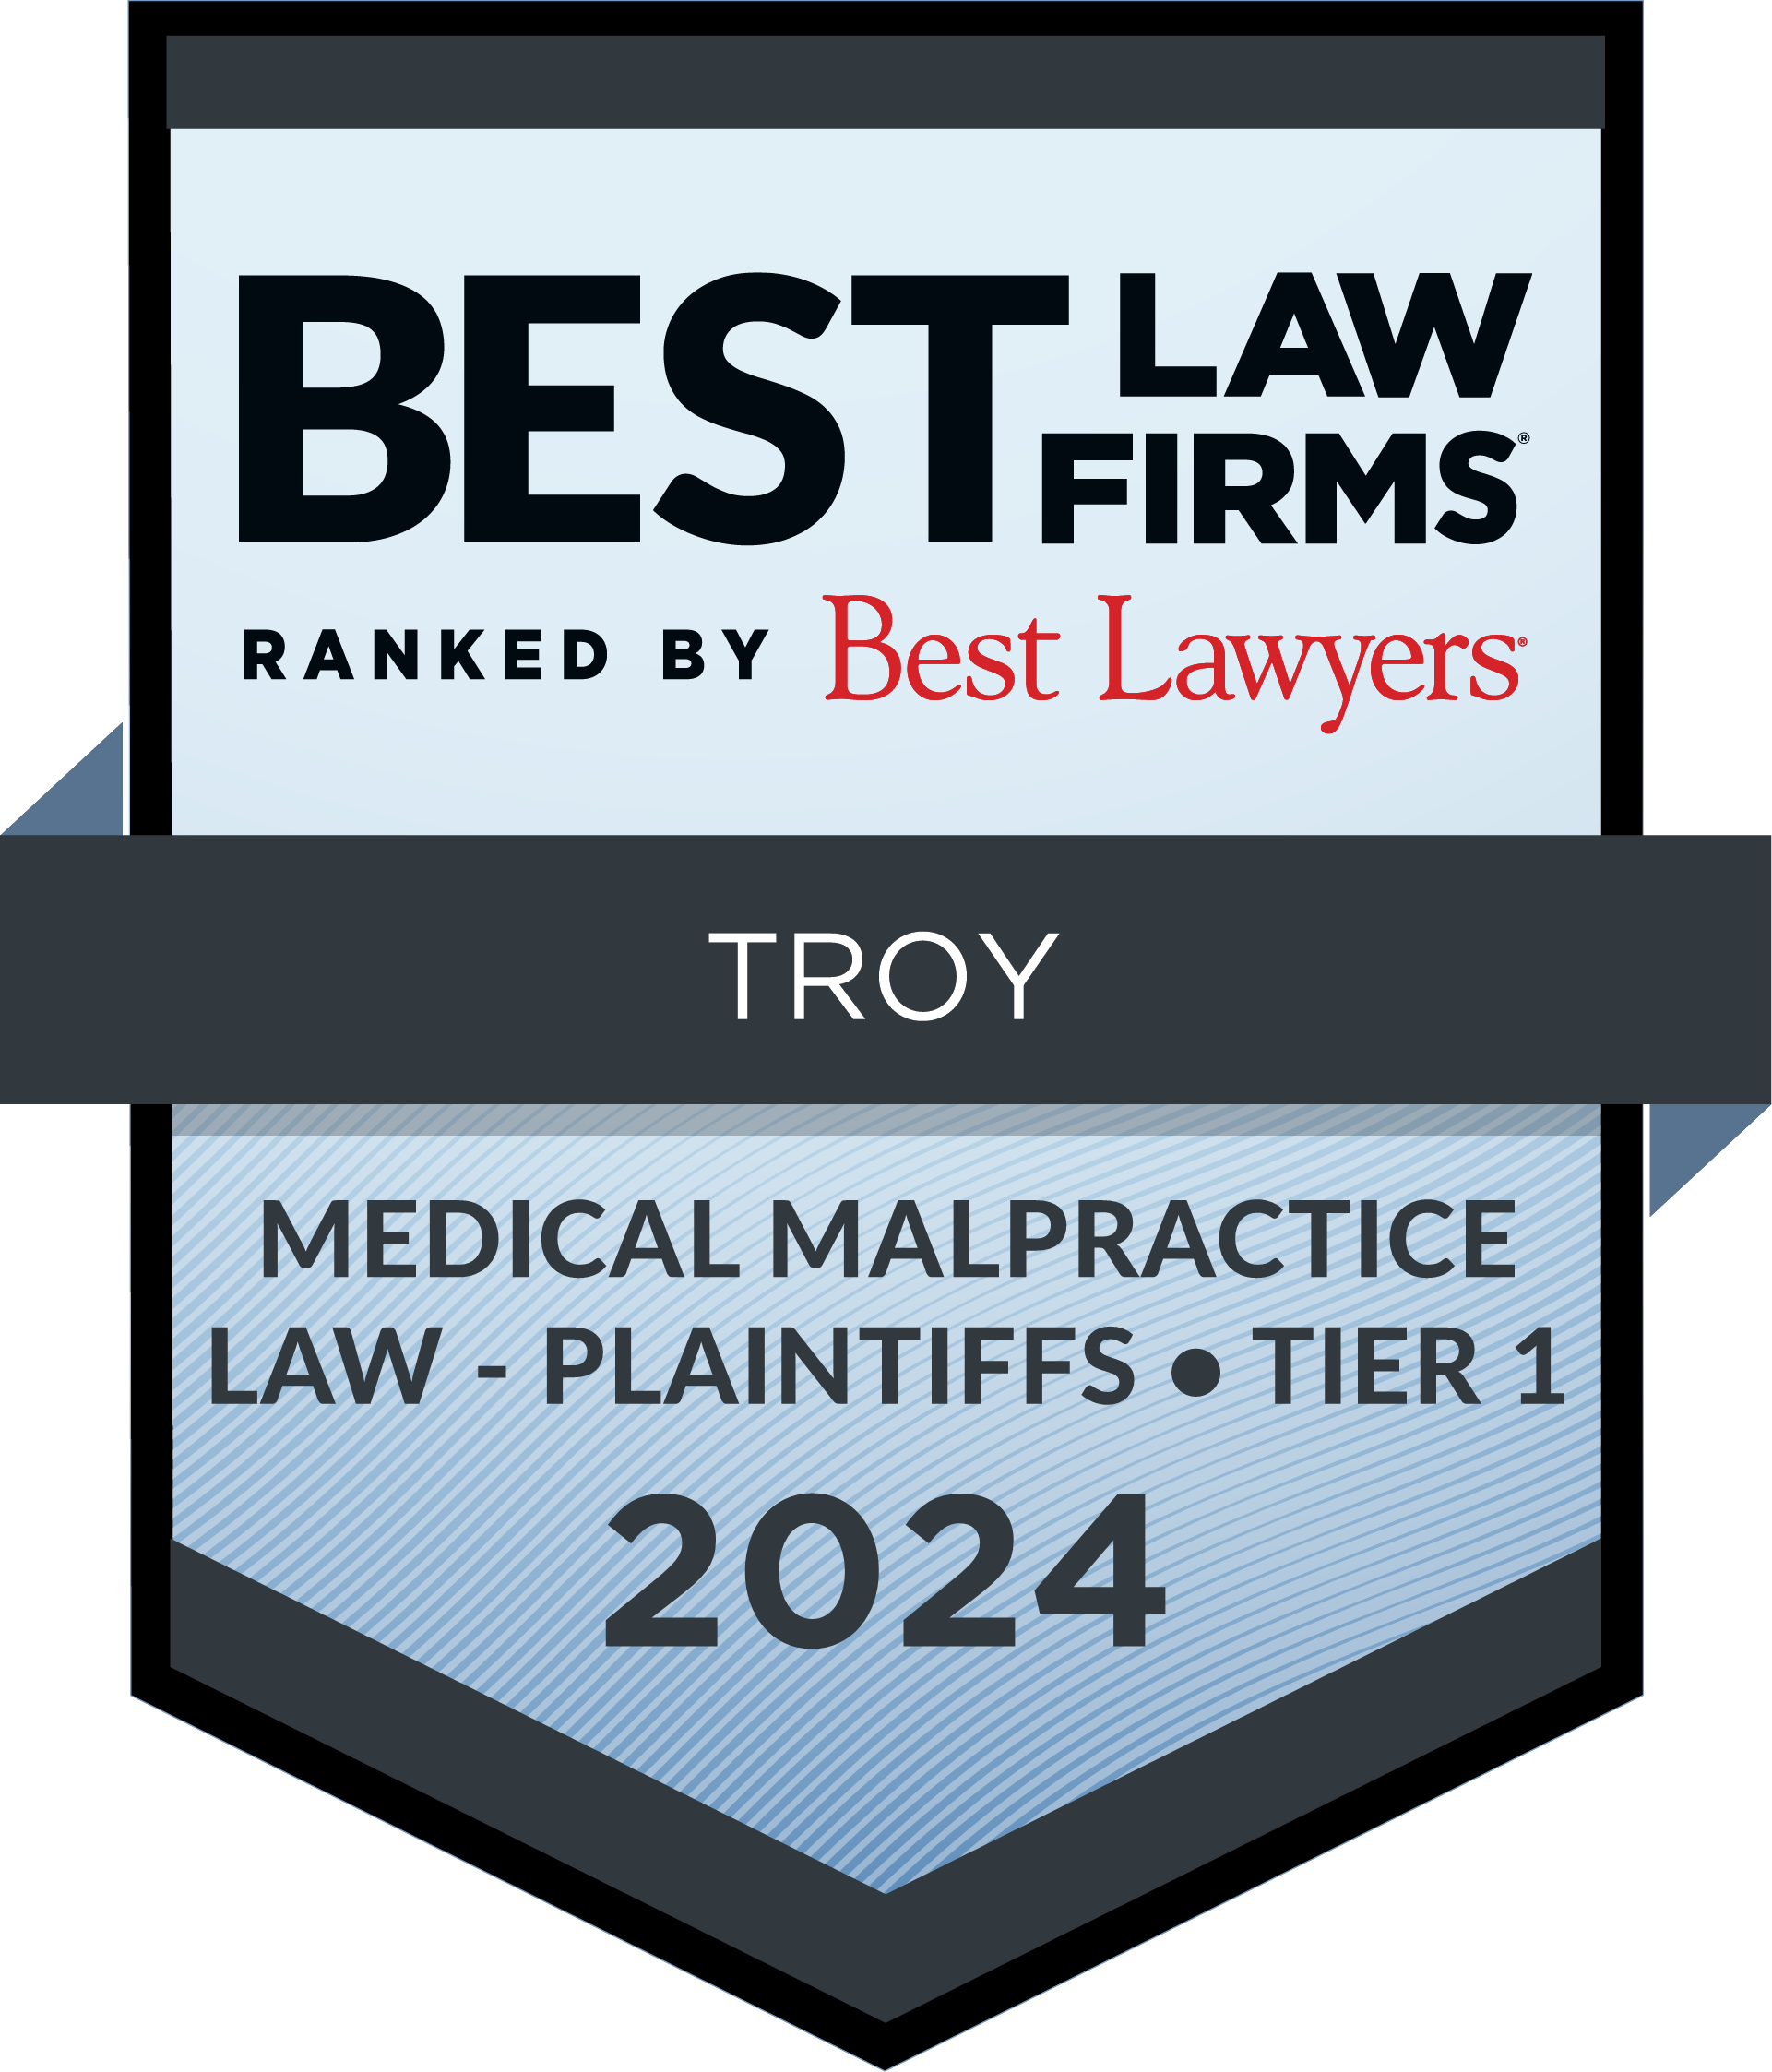 As Ranked by Best Lawyers: Best Law Firms in Troy - Medical Malpractice Law - Plaintiffs, Tier 1, 2024